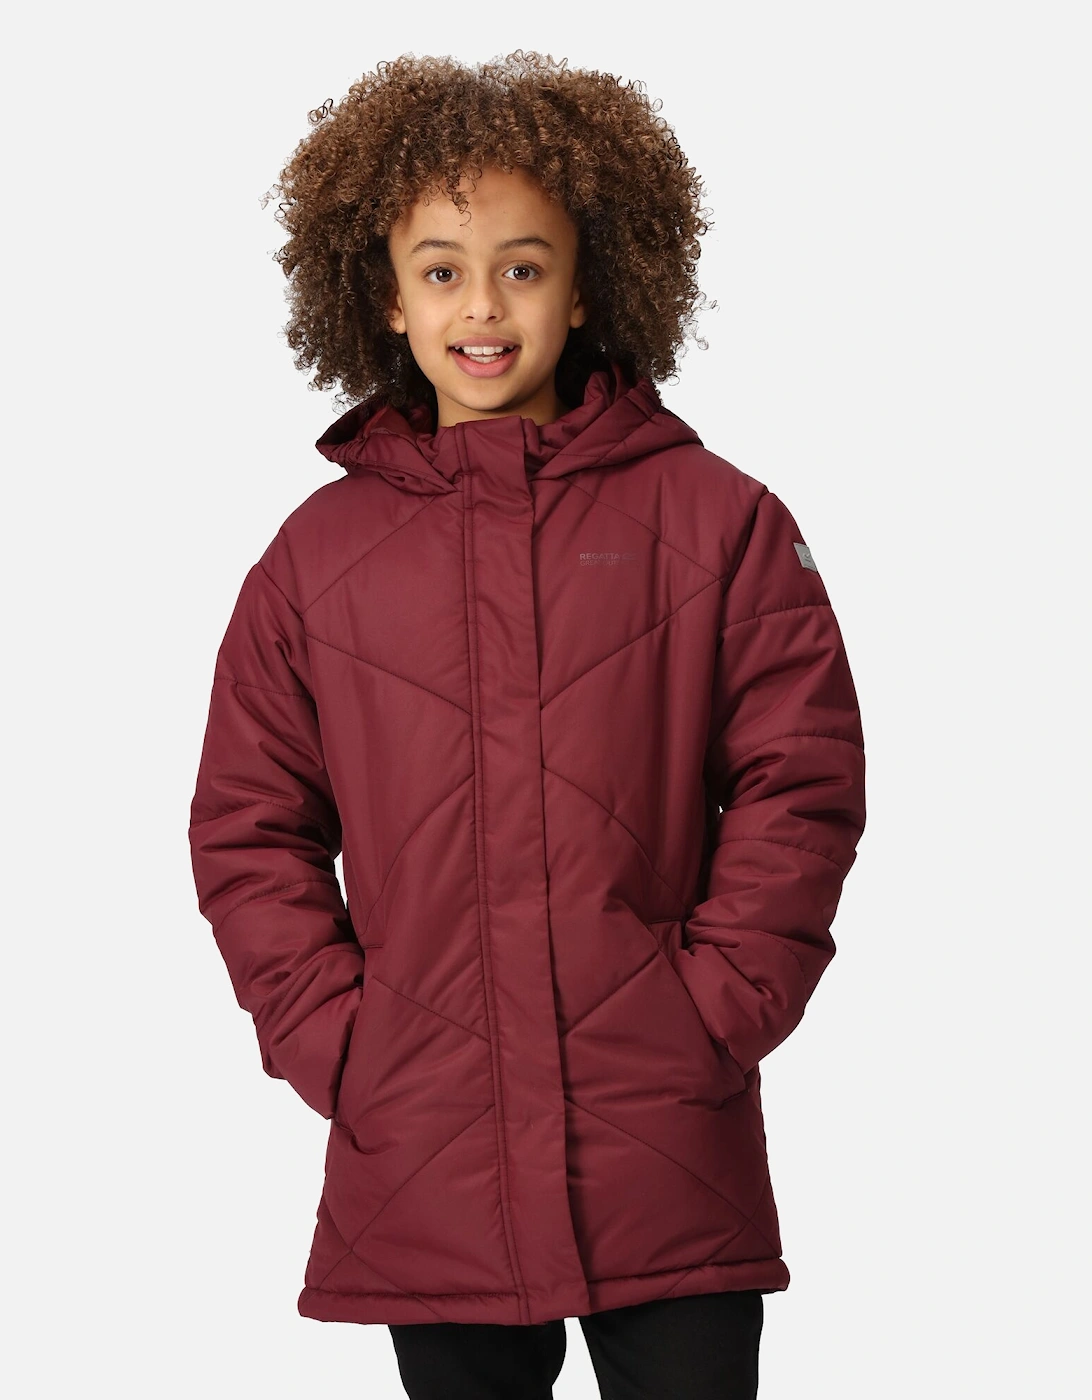 Childrens/Kids Avriella Insulated Jacket